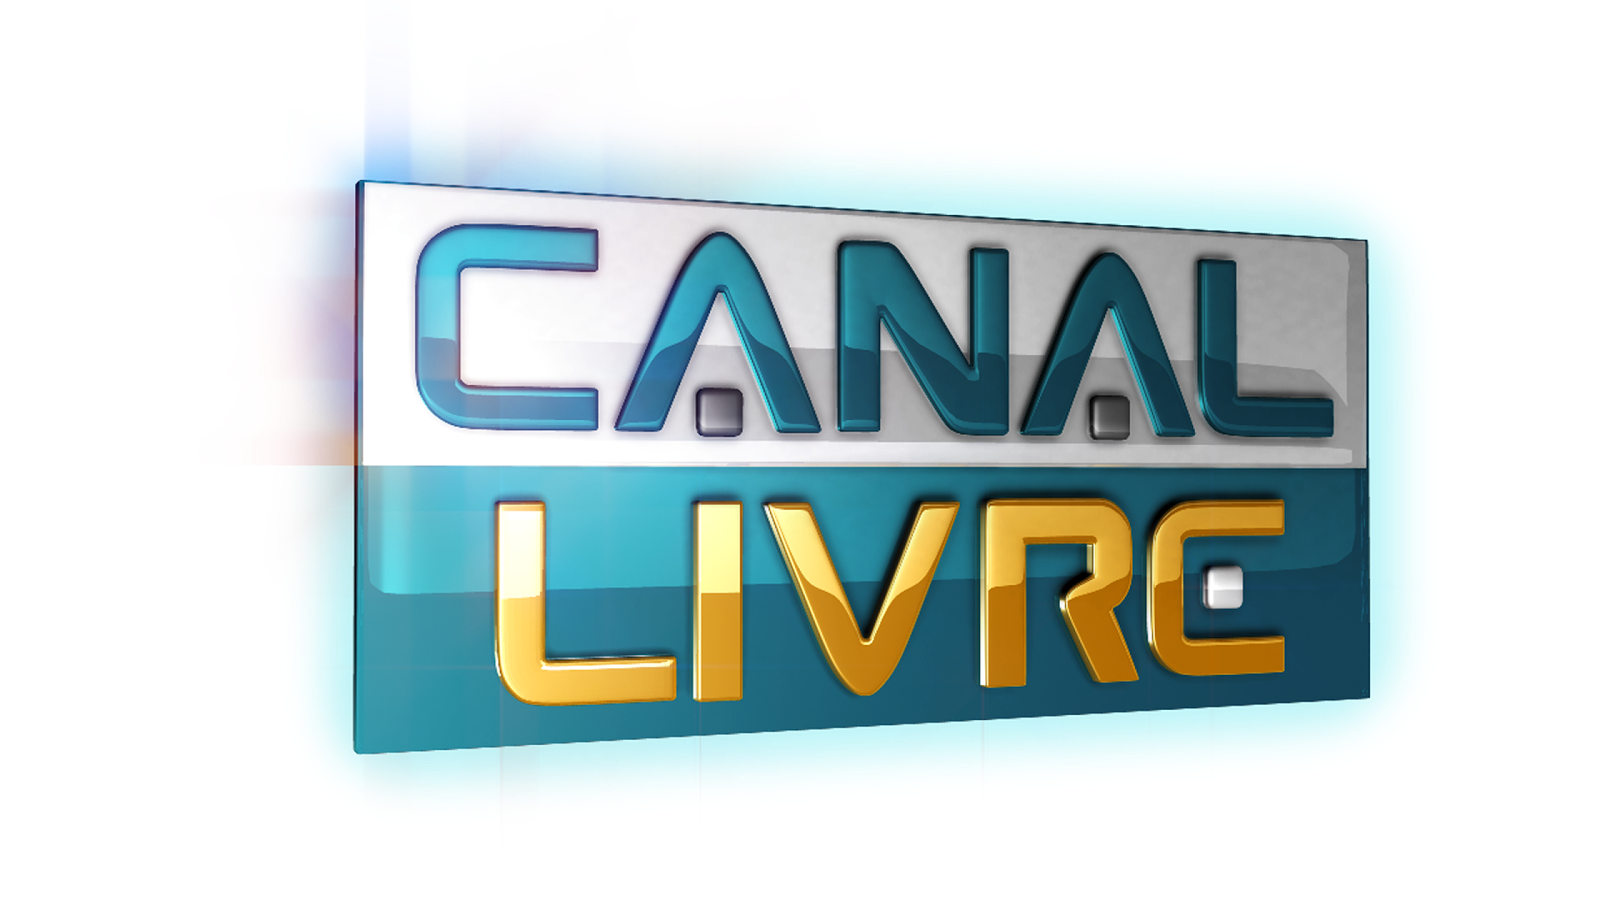 Canal Livre Logo photo - 1